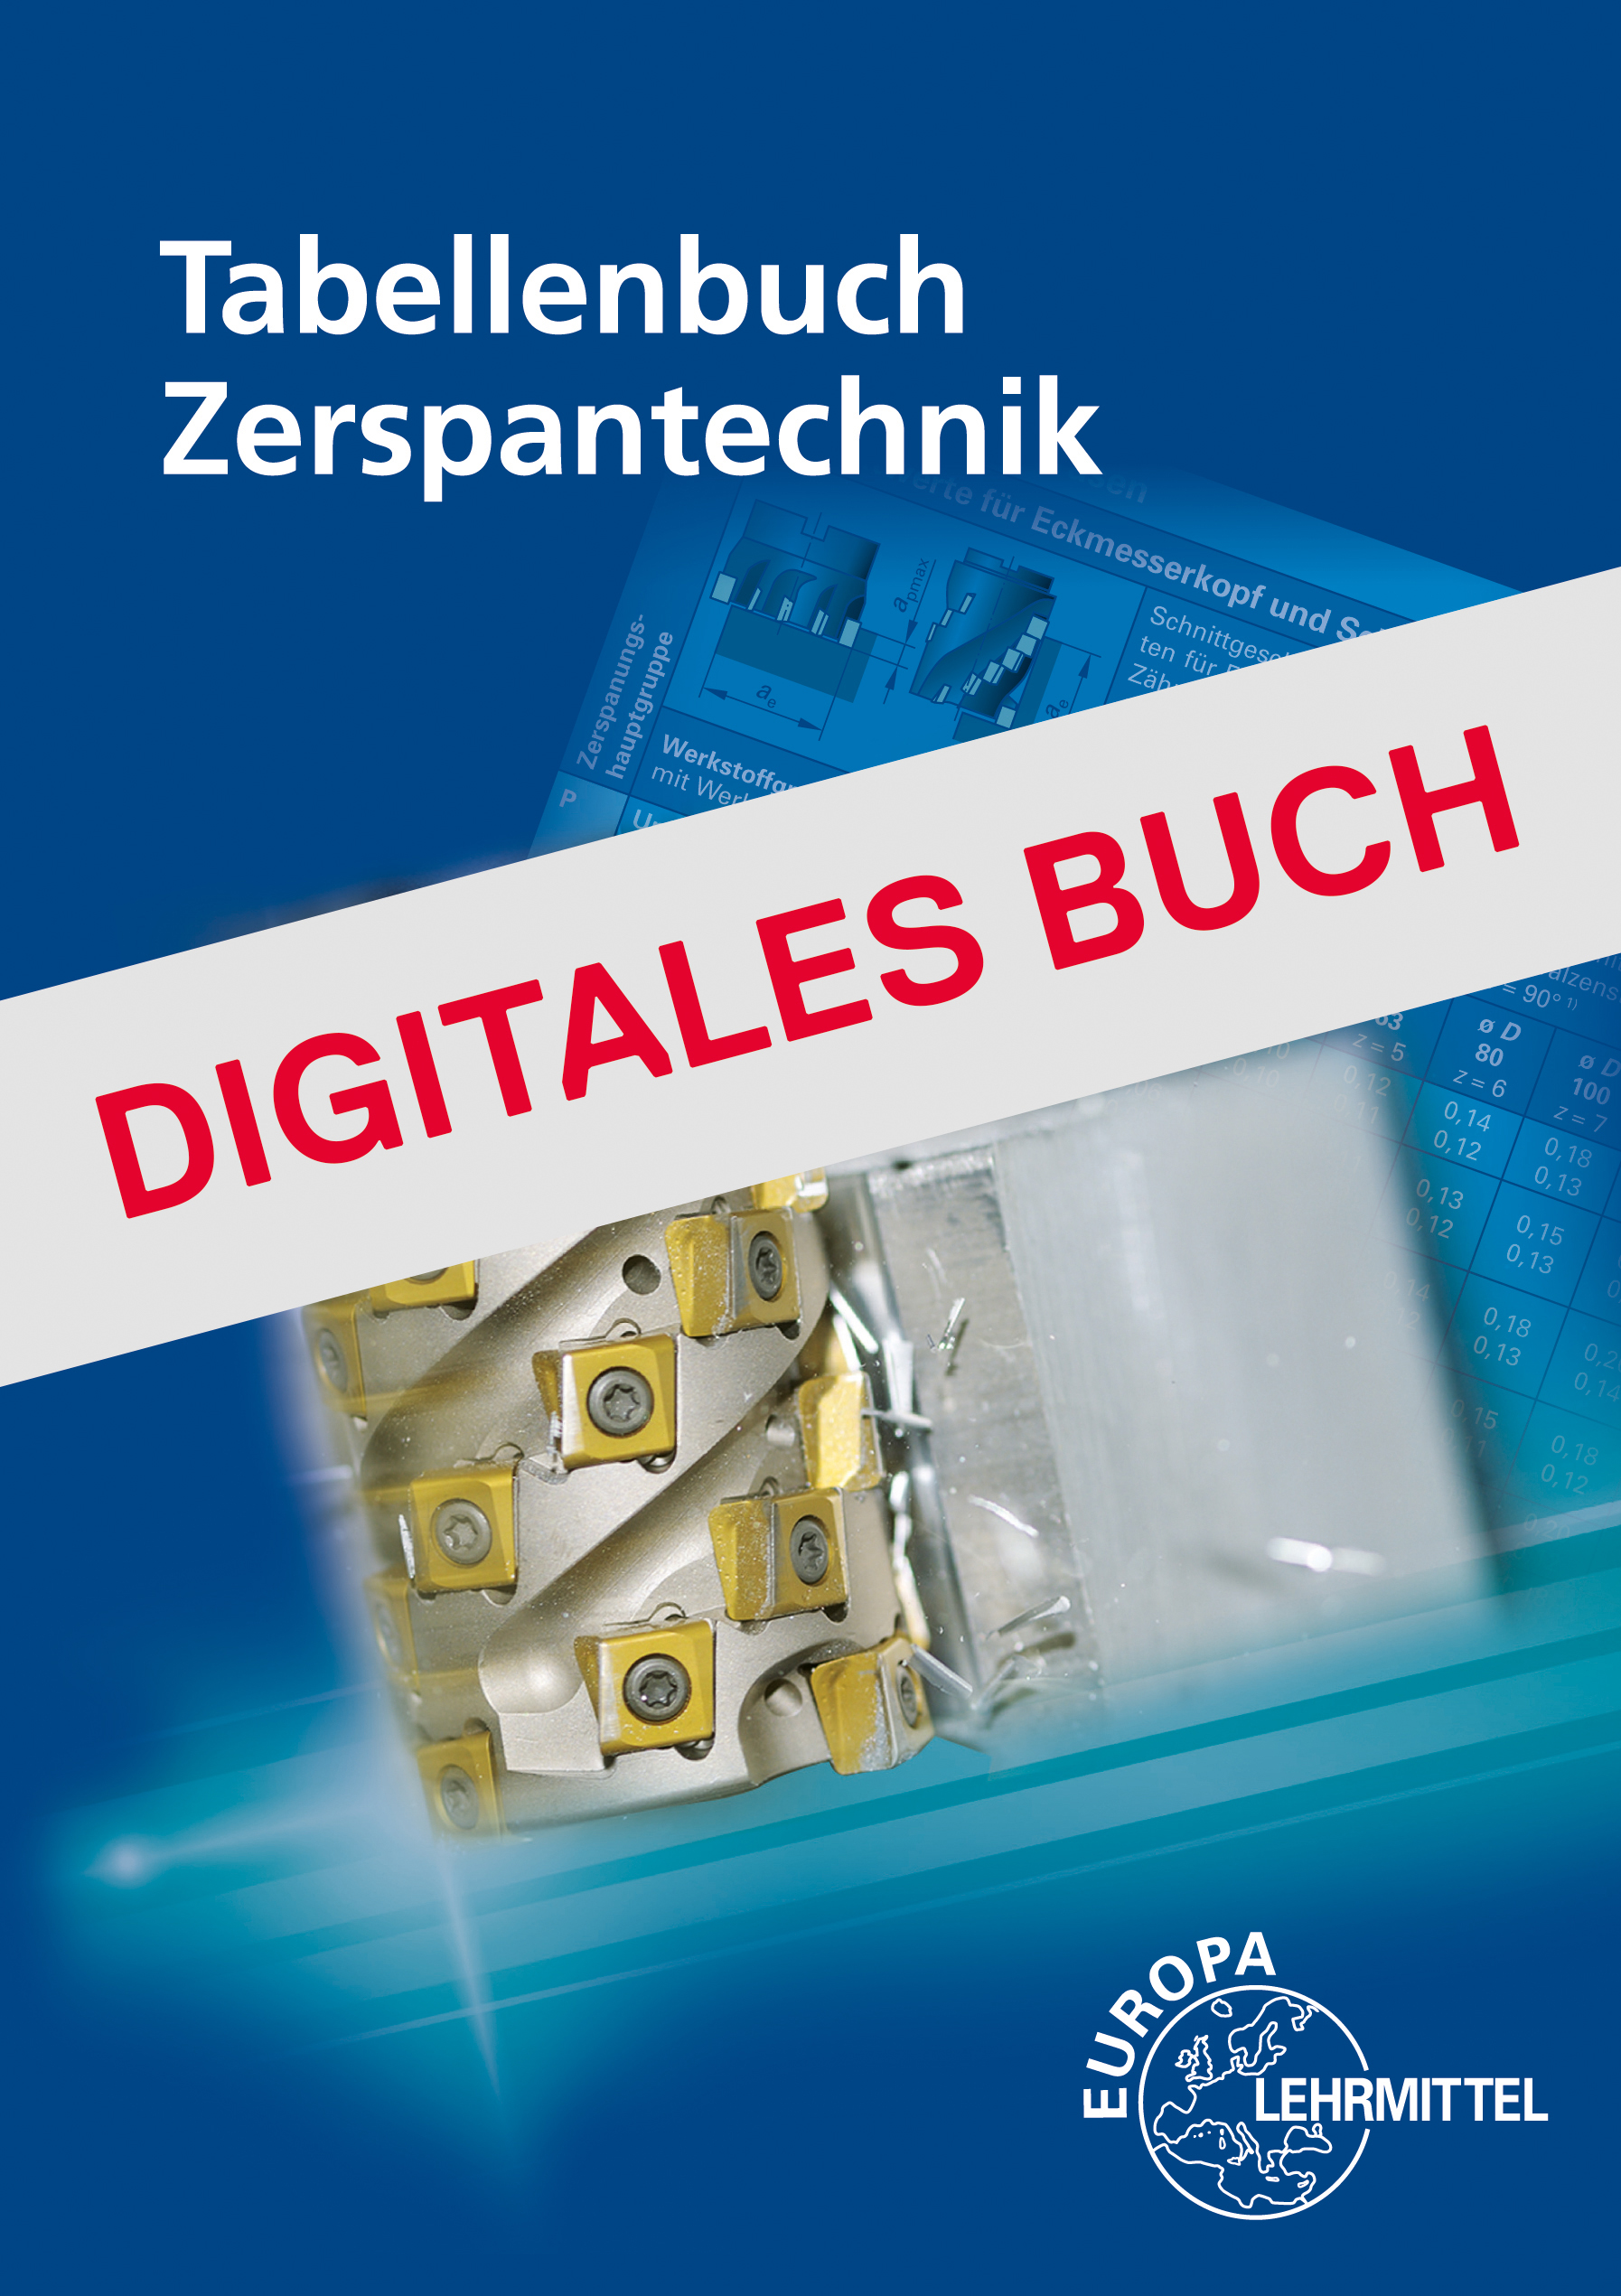 Tabellenbuch Zerspantechnik - Digitales Buch